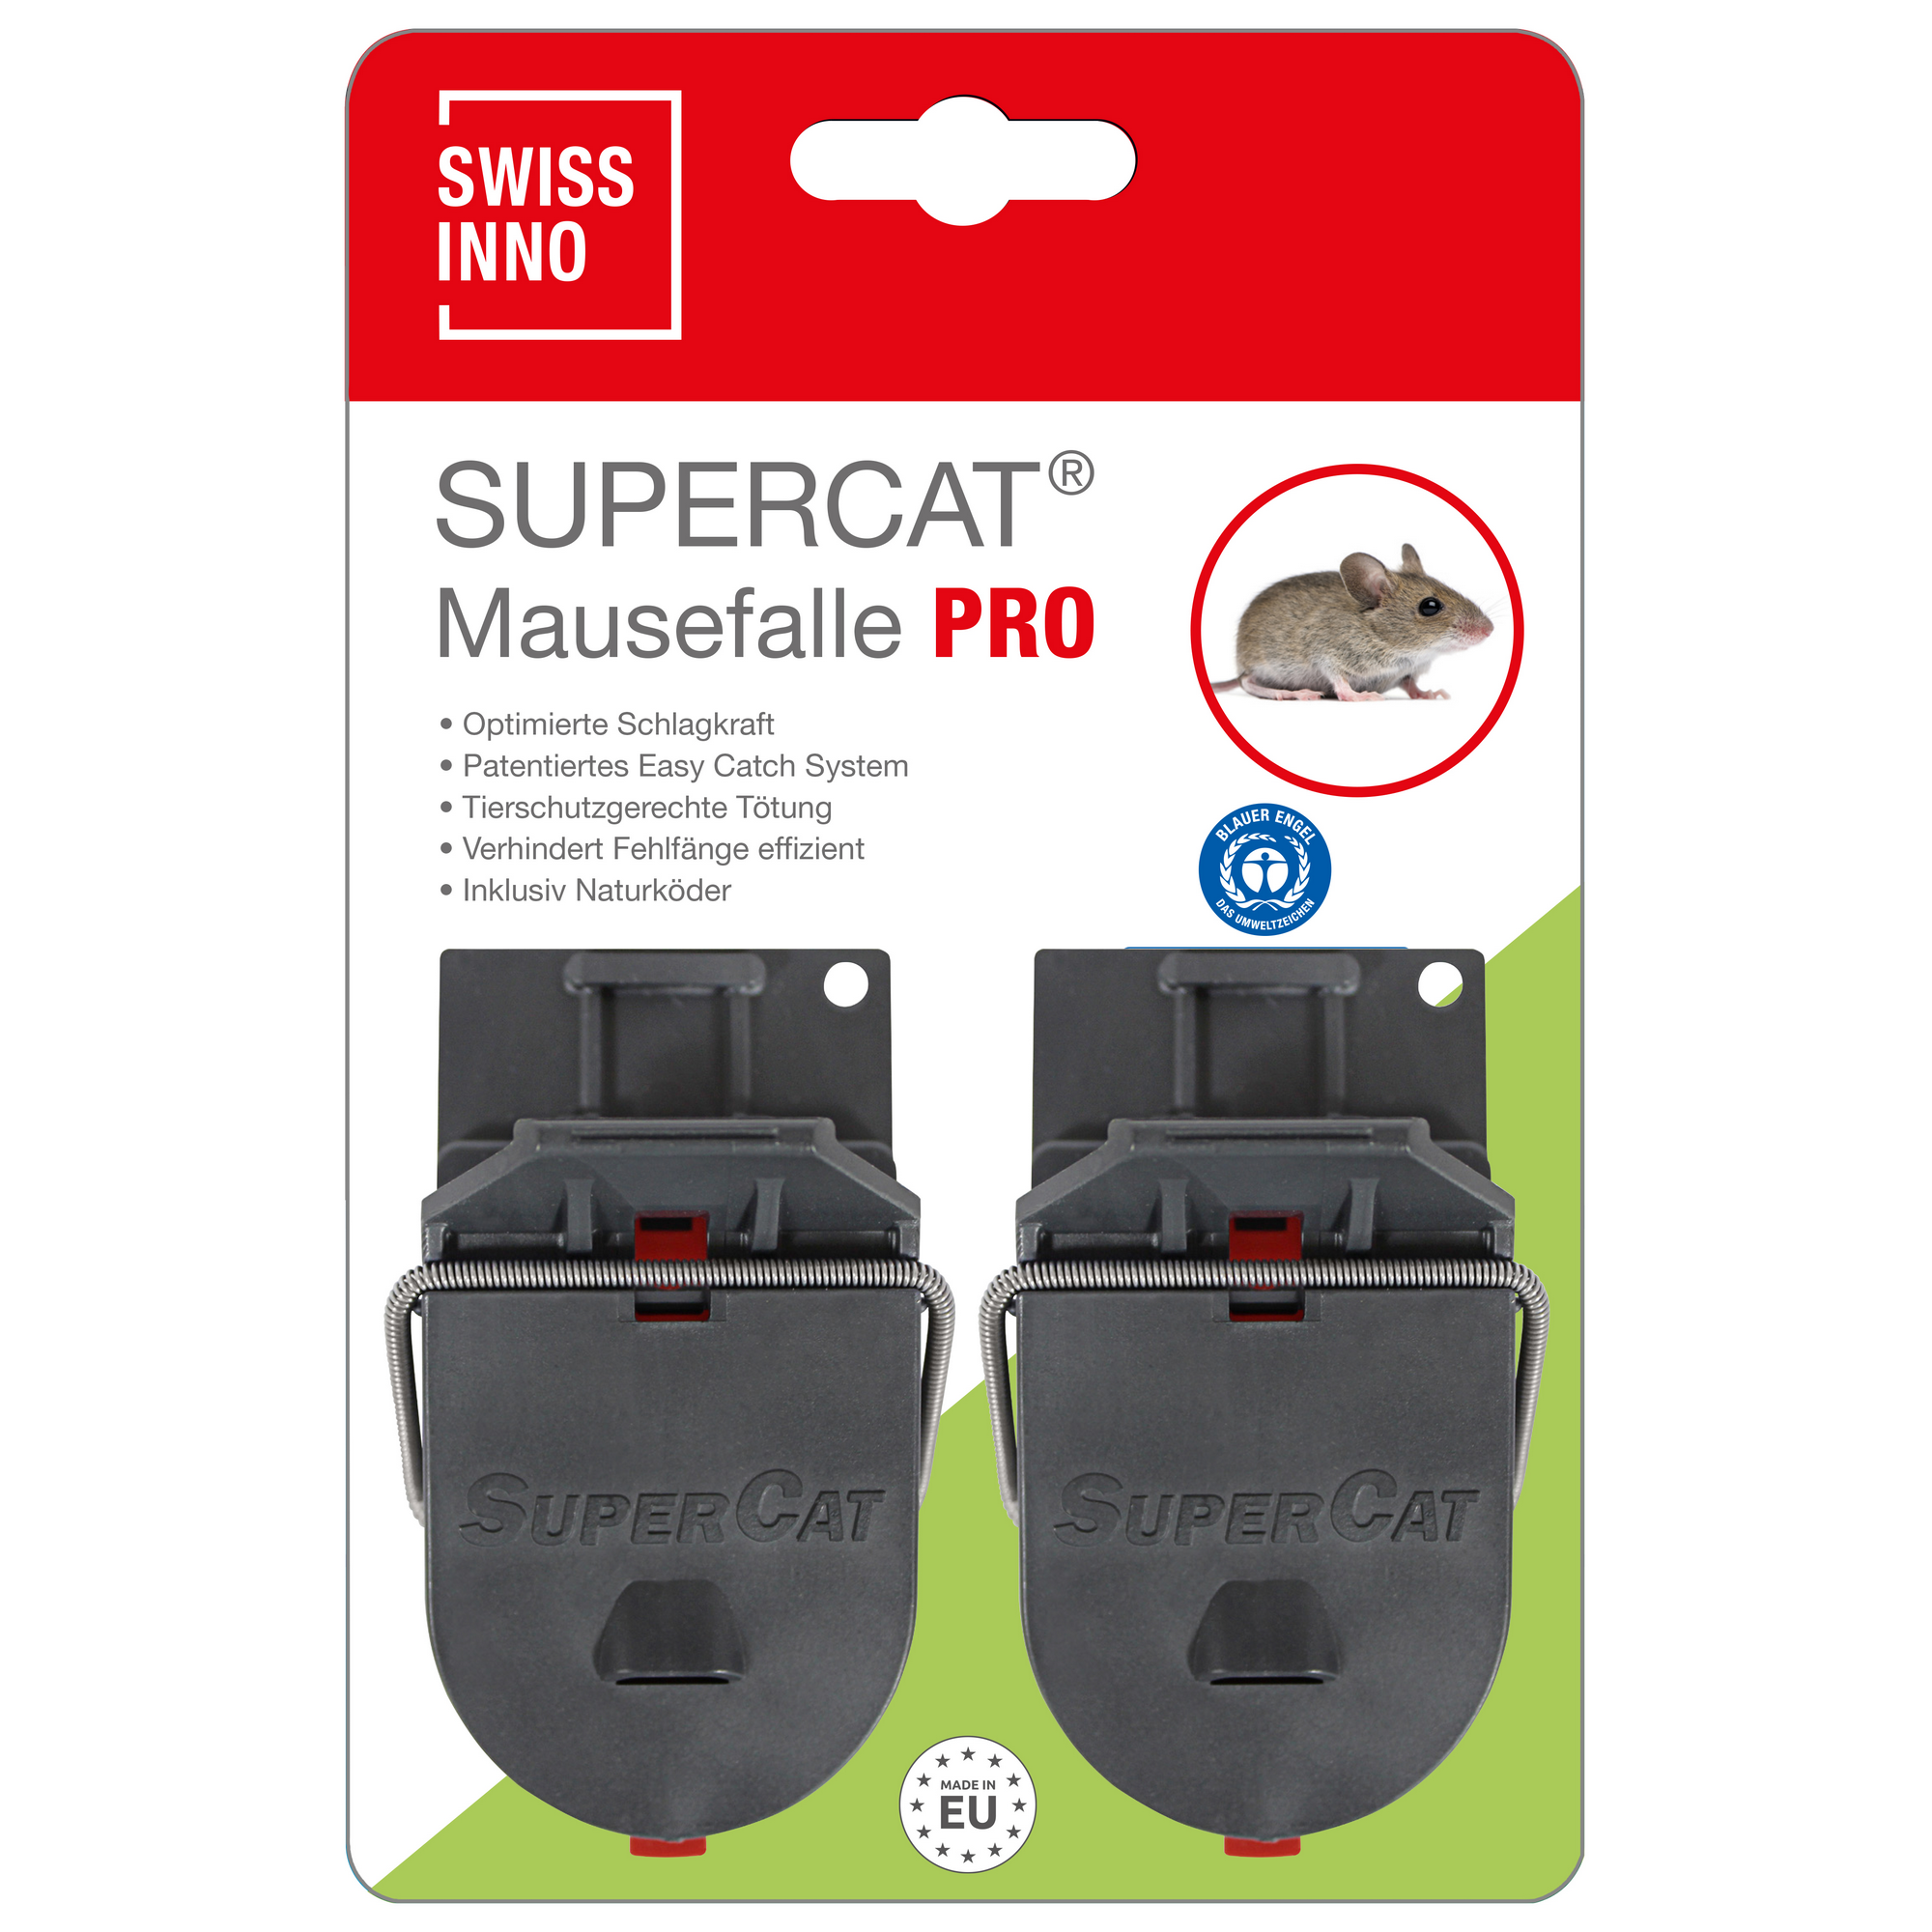 Mausefalle 'SuperCat' Pro mit Naturköder 2 Stück + product picture